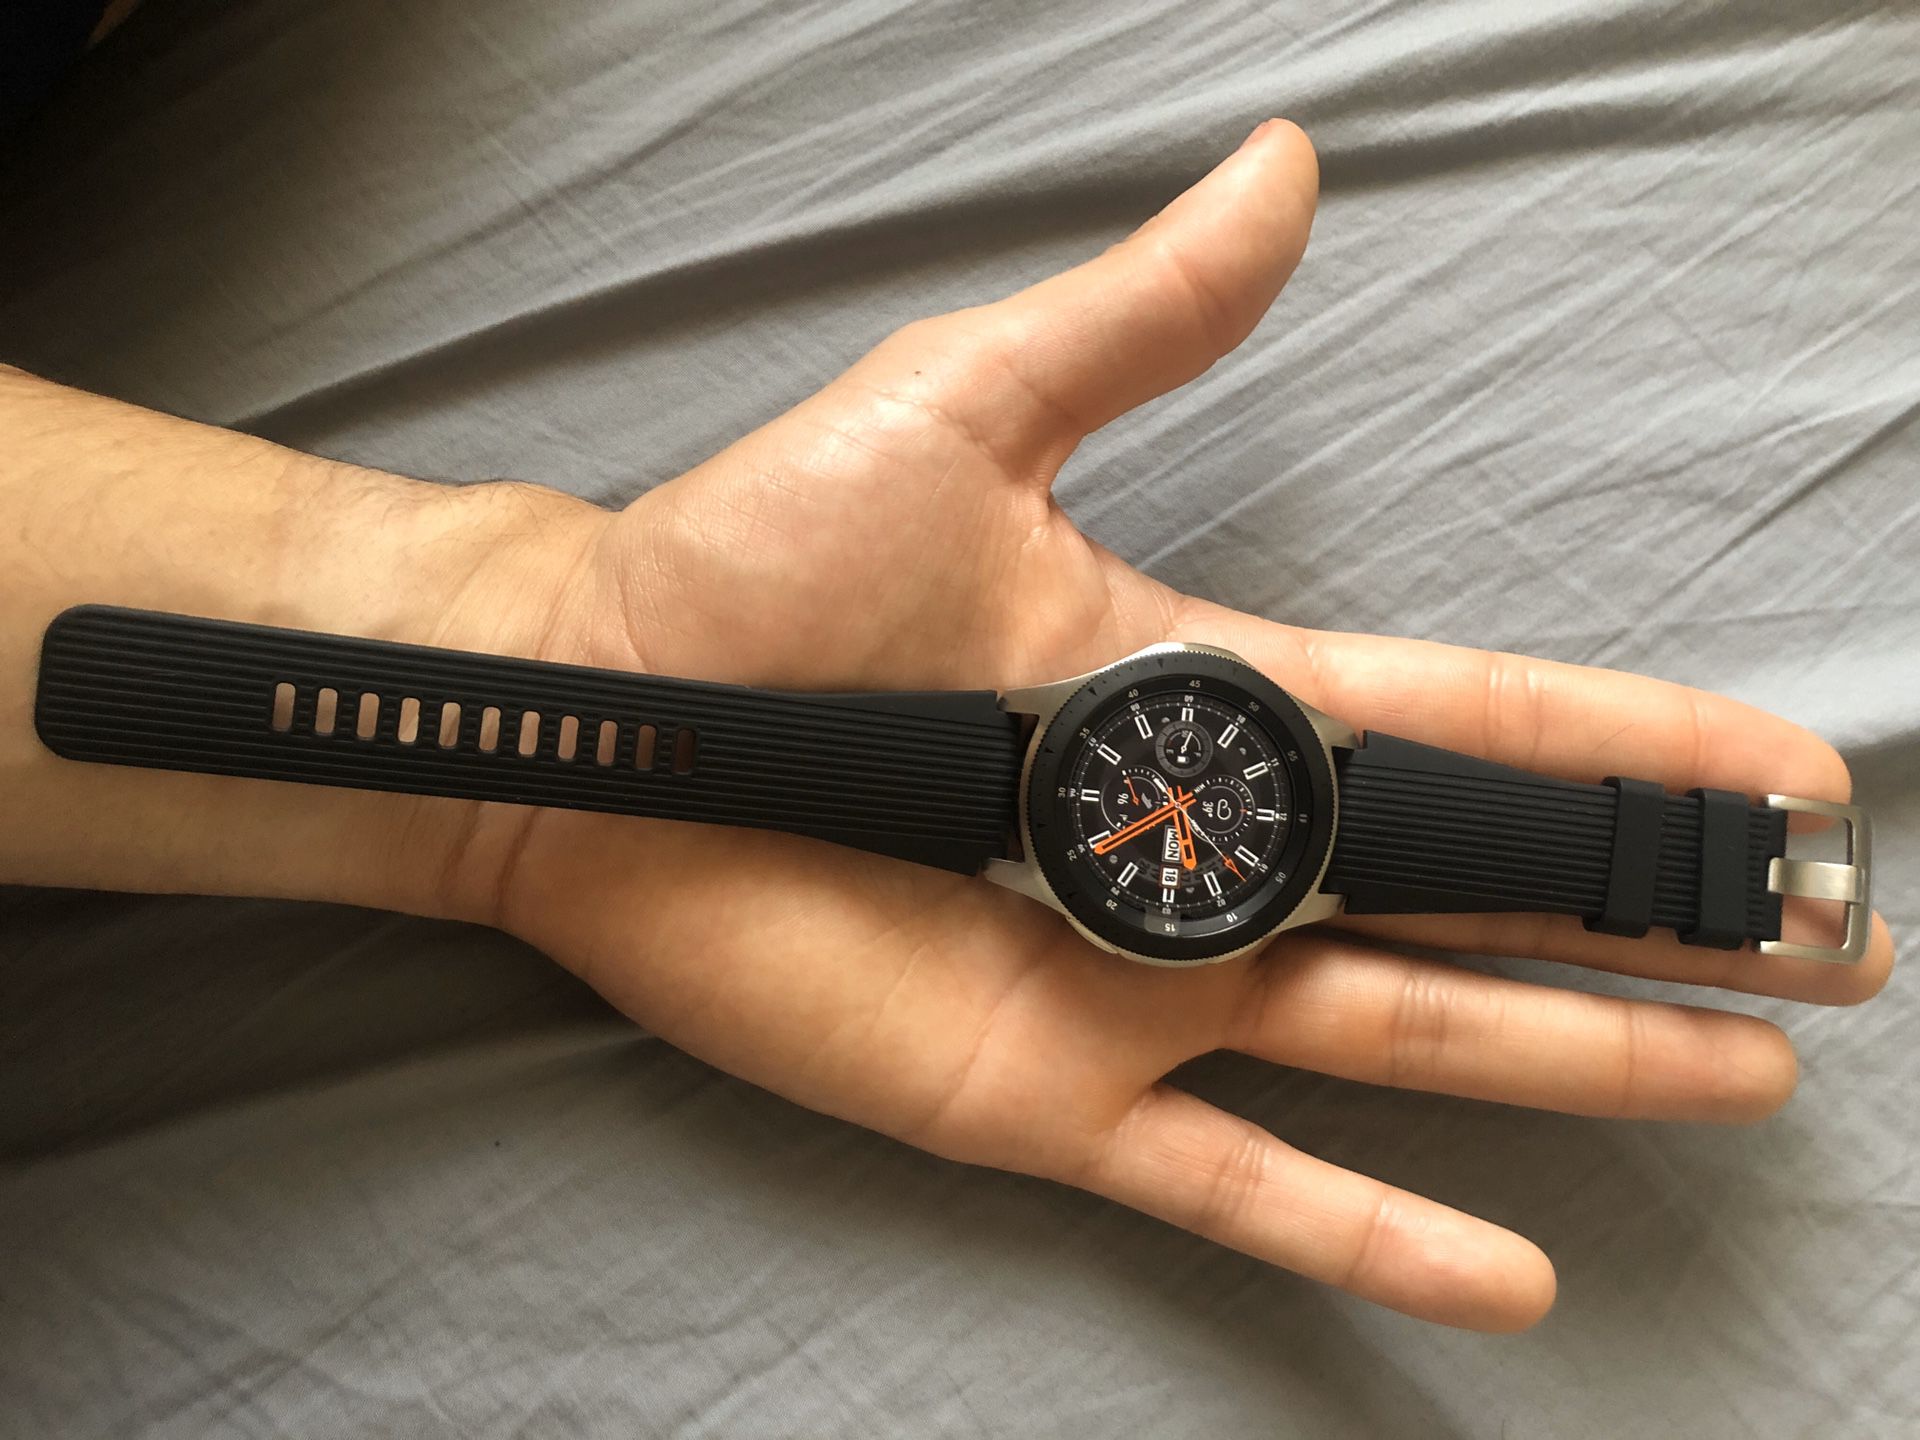 Galaxy Watch 46mm LTE